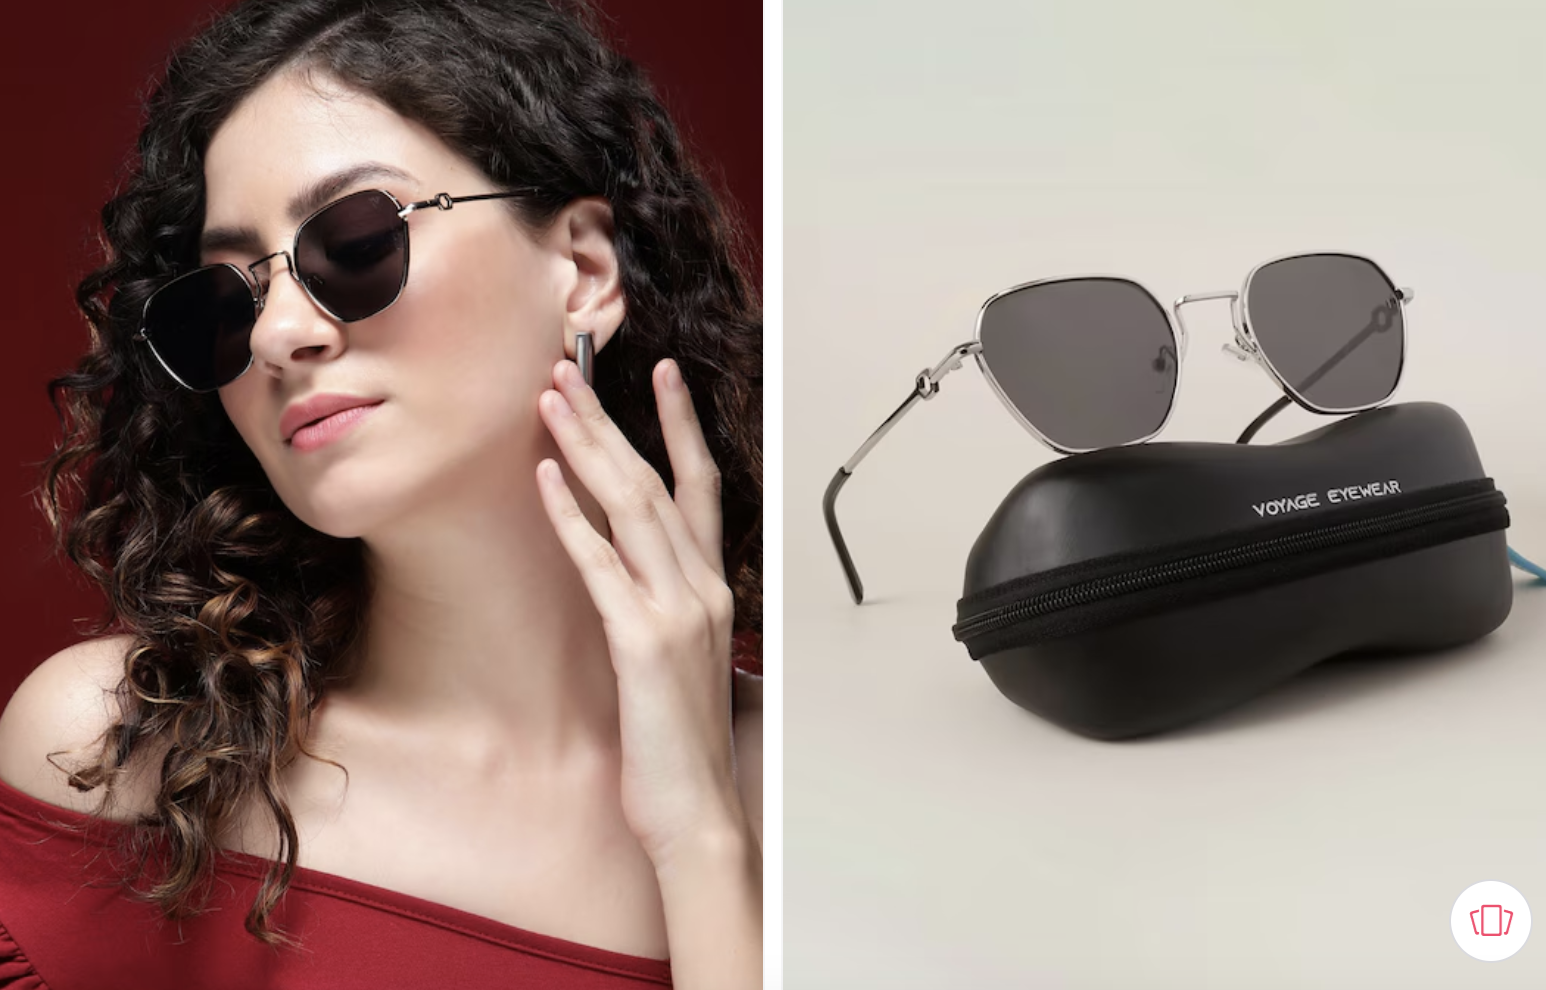 Vouge sunglasses for women